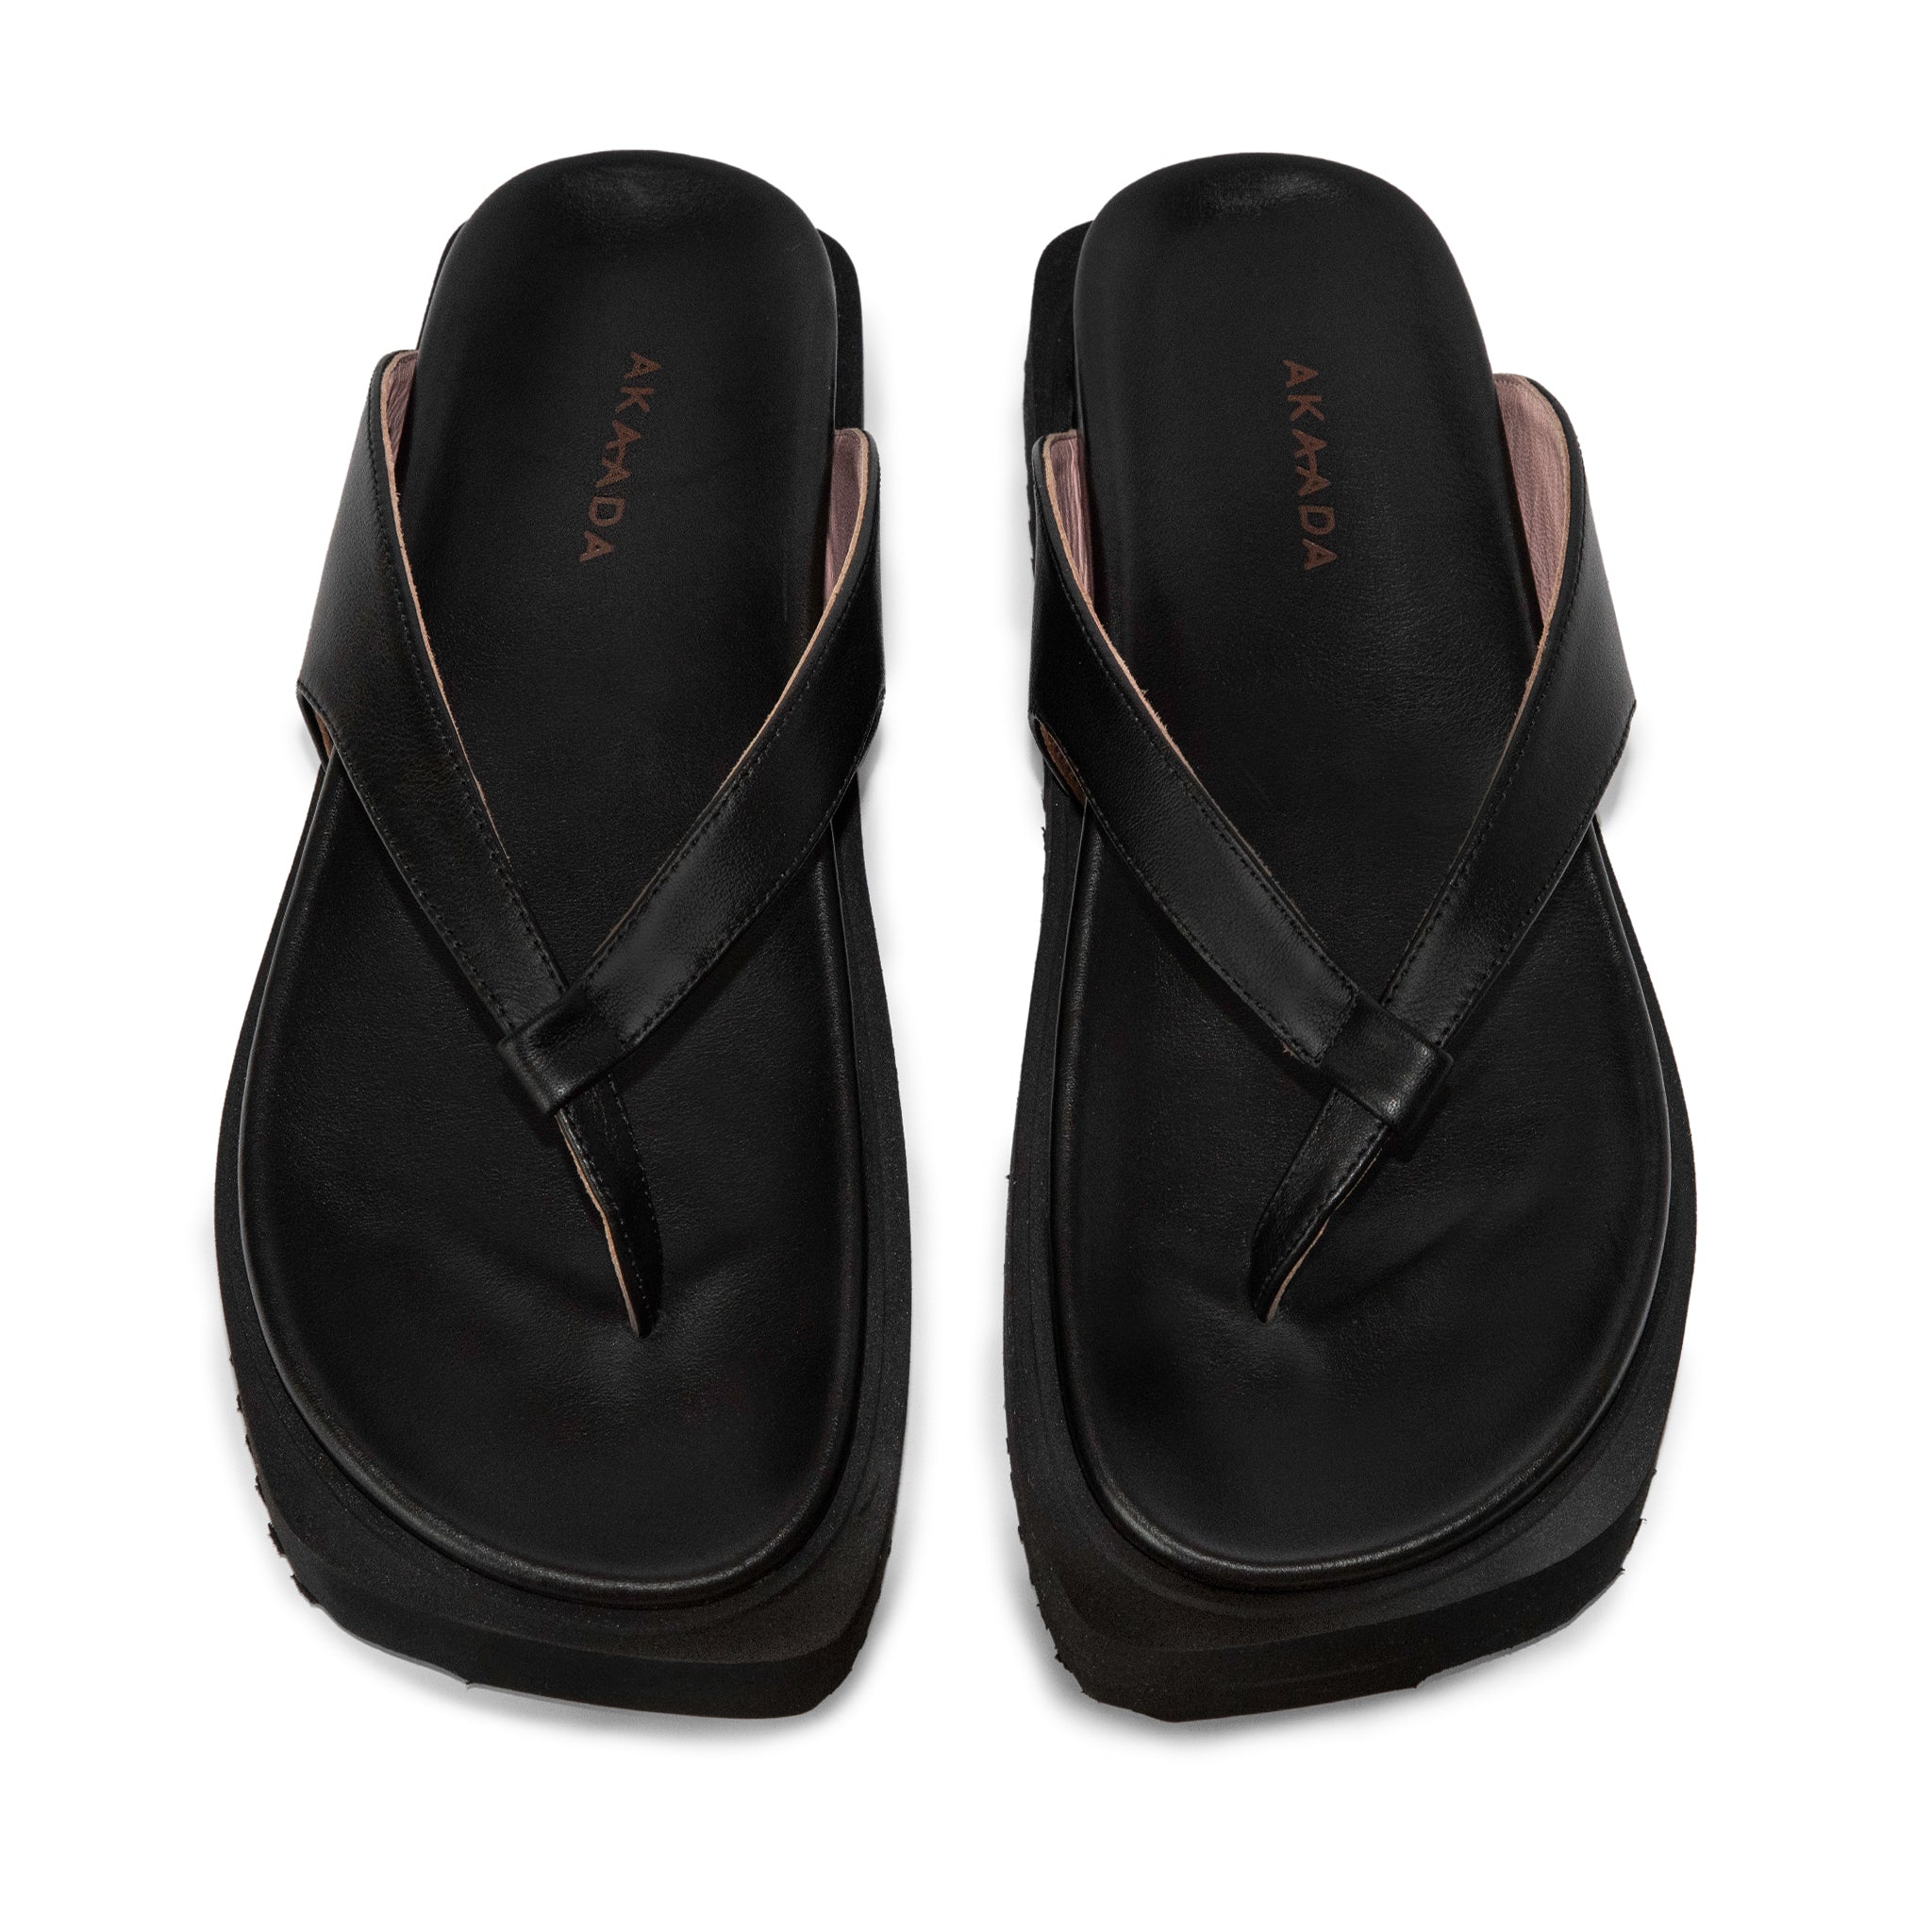 Sora Black Leather Sandals LES23127-BLACK - 4